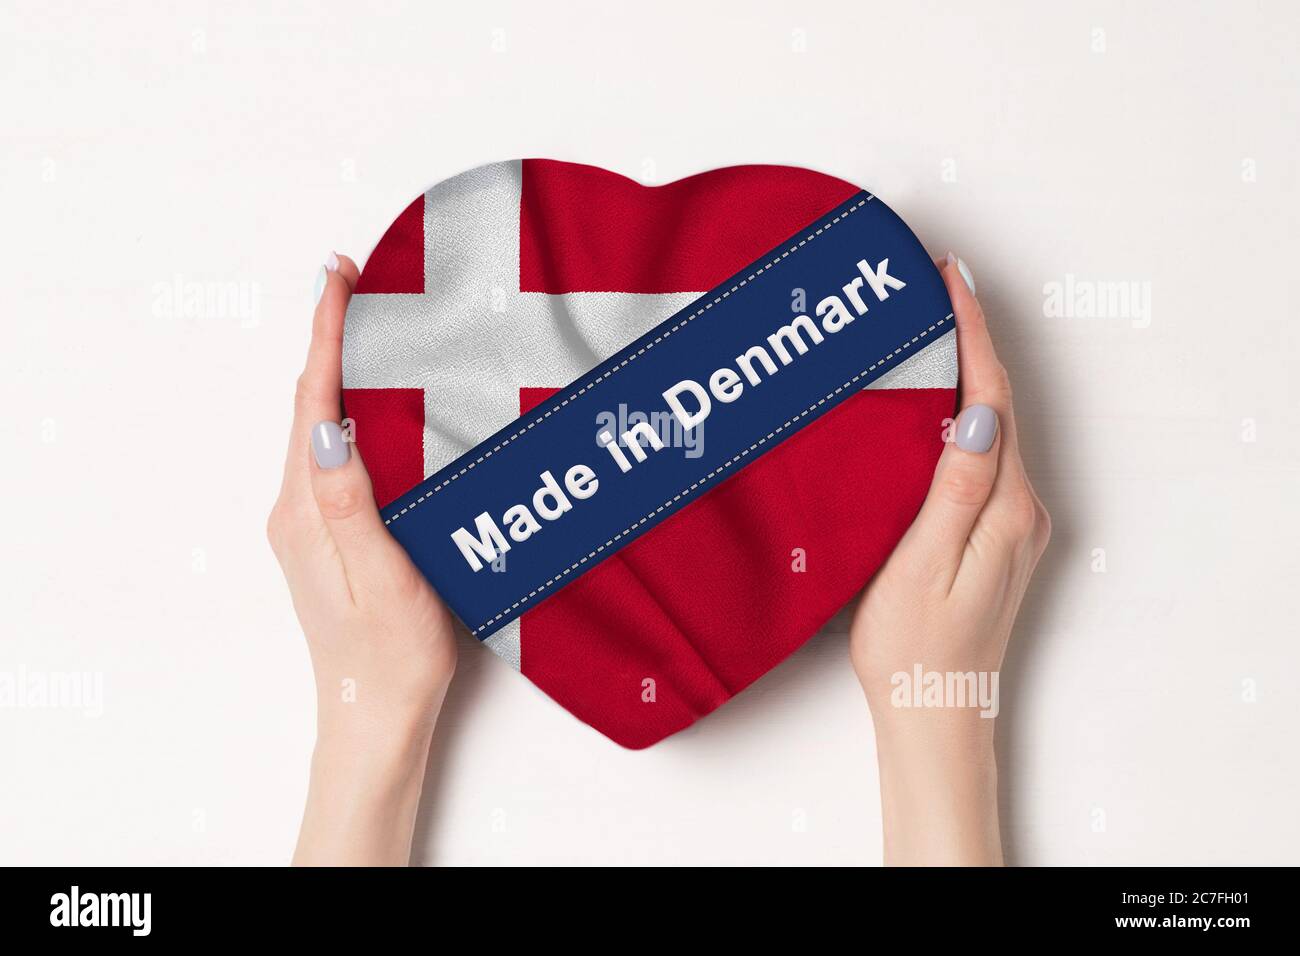 Inscription Made in Denmark the flag of Denmark. Female hands holding a heart shaped box. White background. Stock Photo